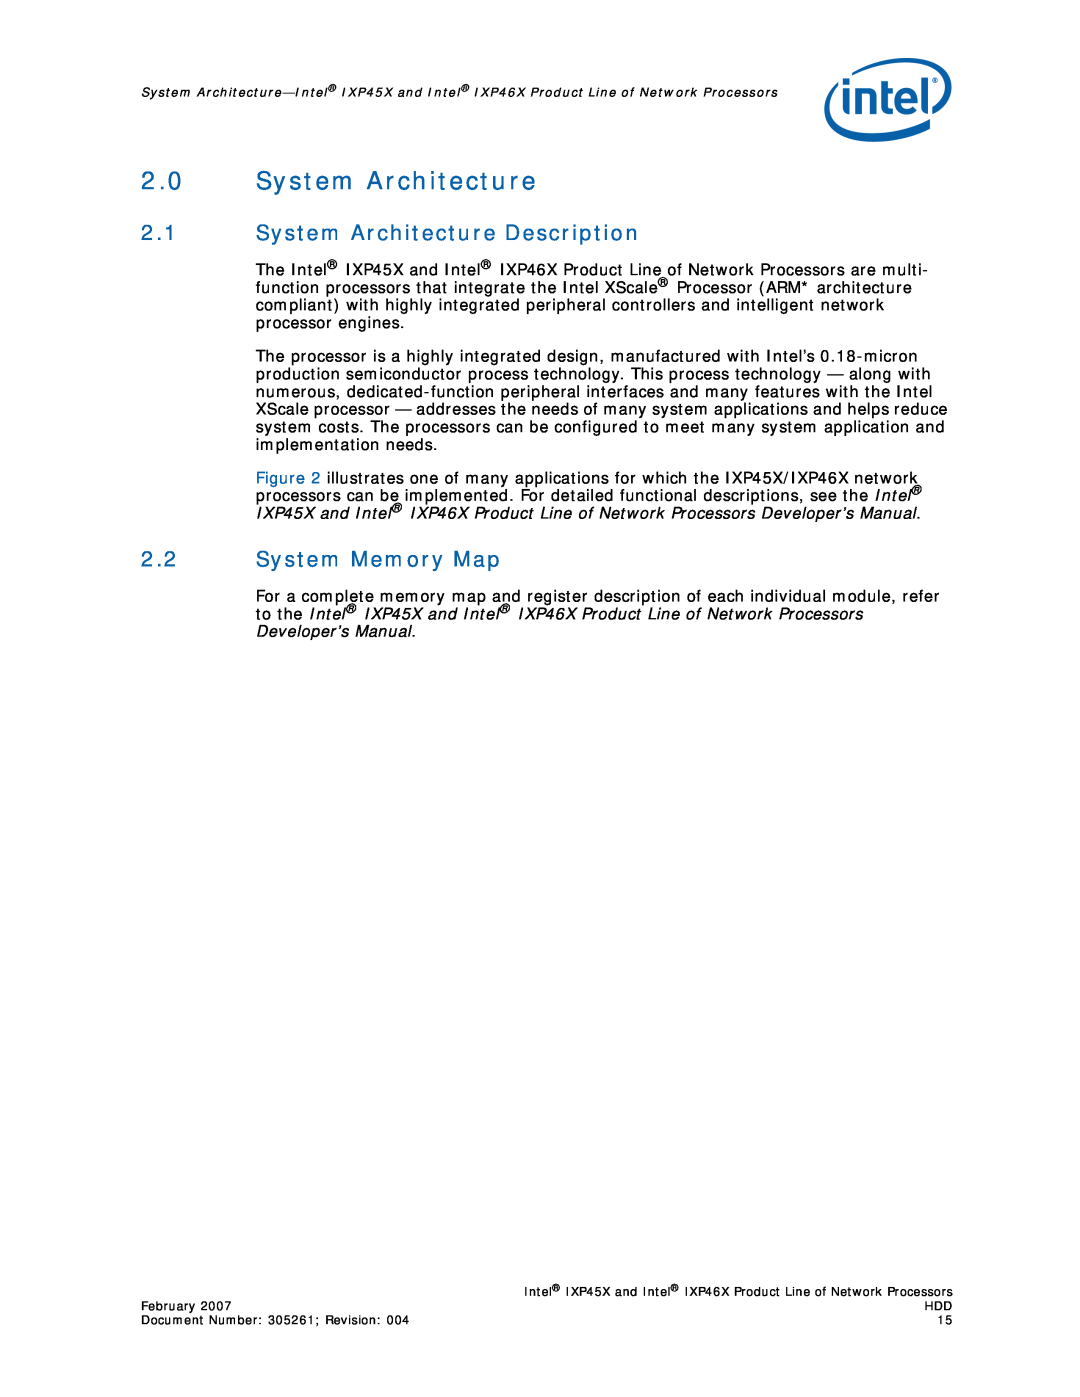 Intel IXP45X, IXP46X manual 2.0System Architecture, 2.1System Architecture Description, 2.2System Memory Map 